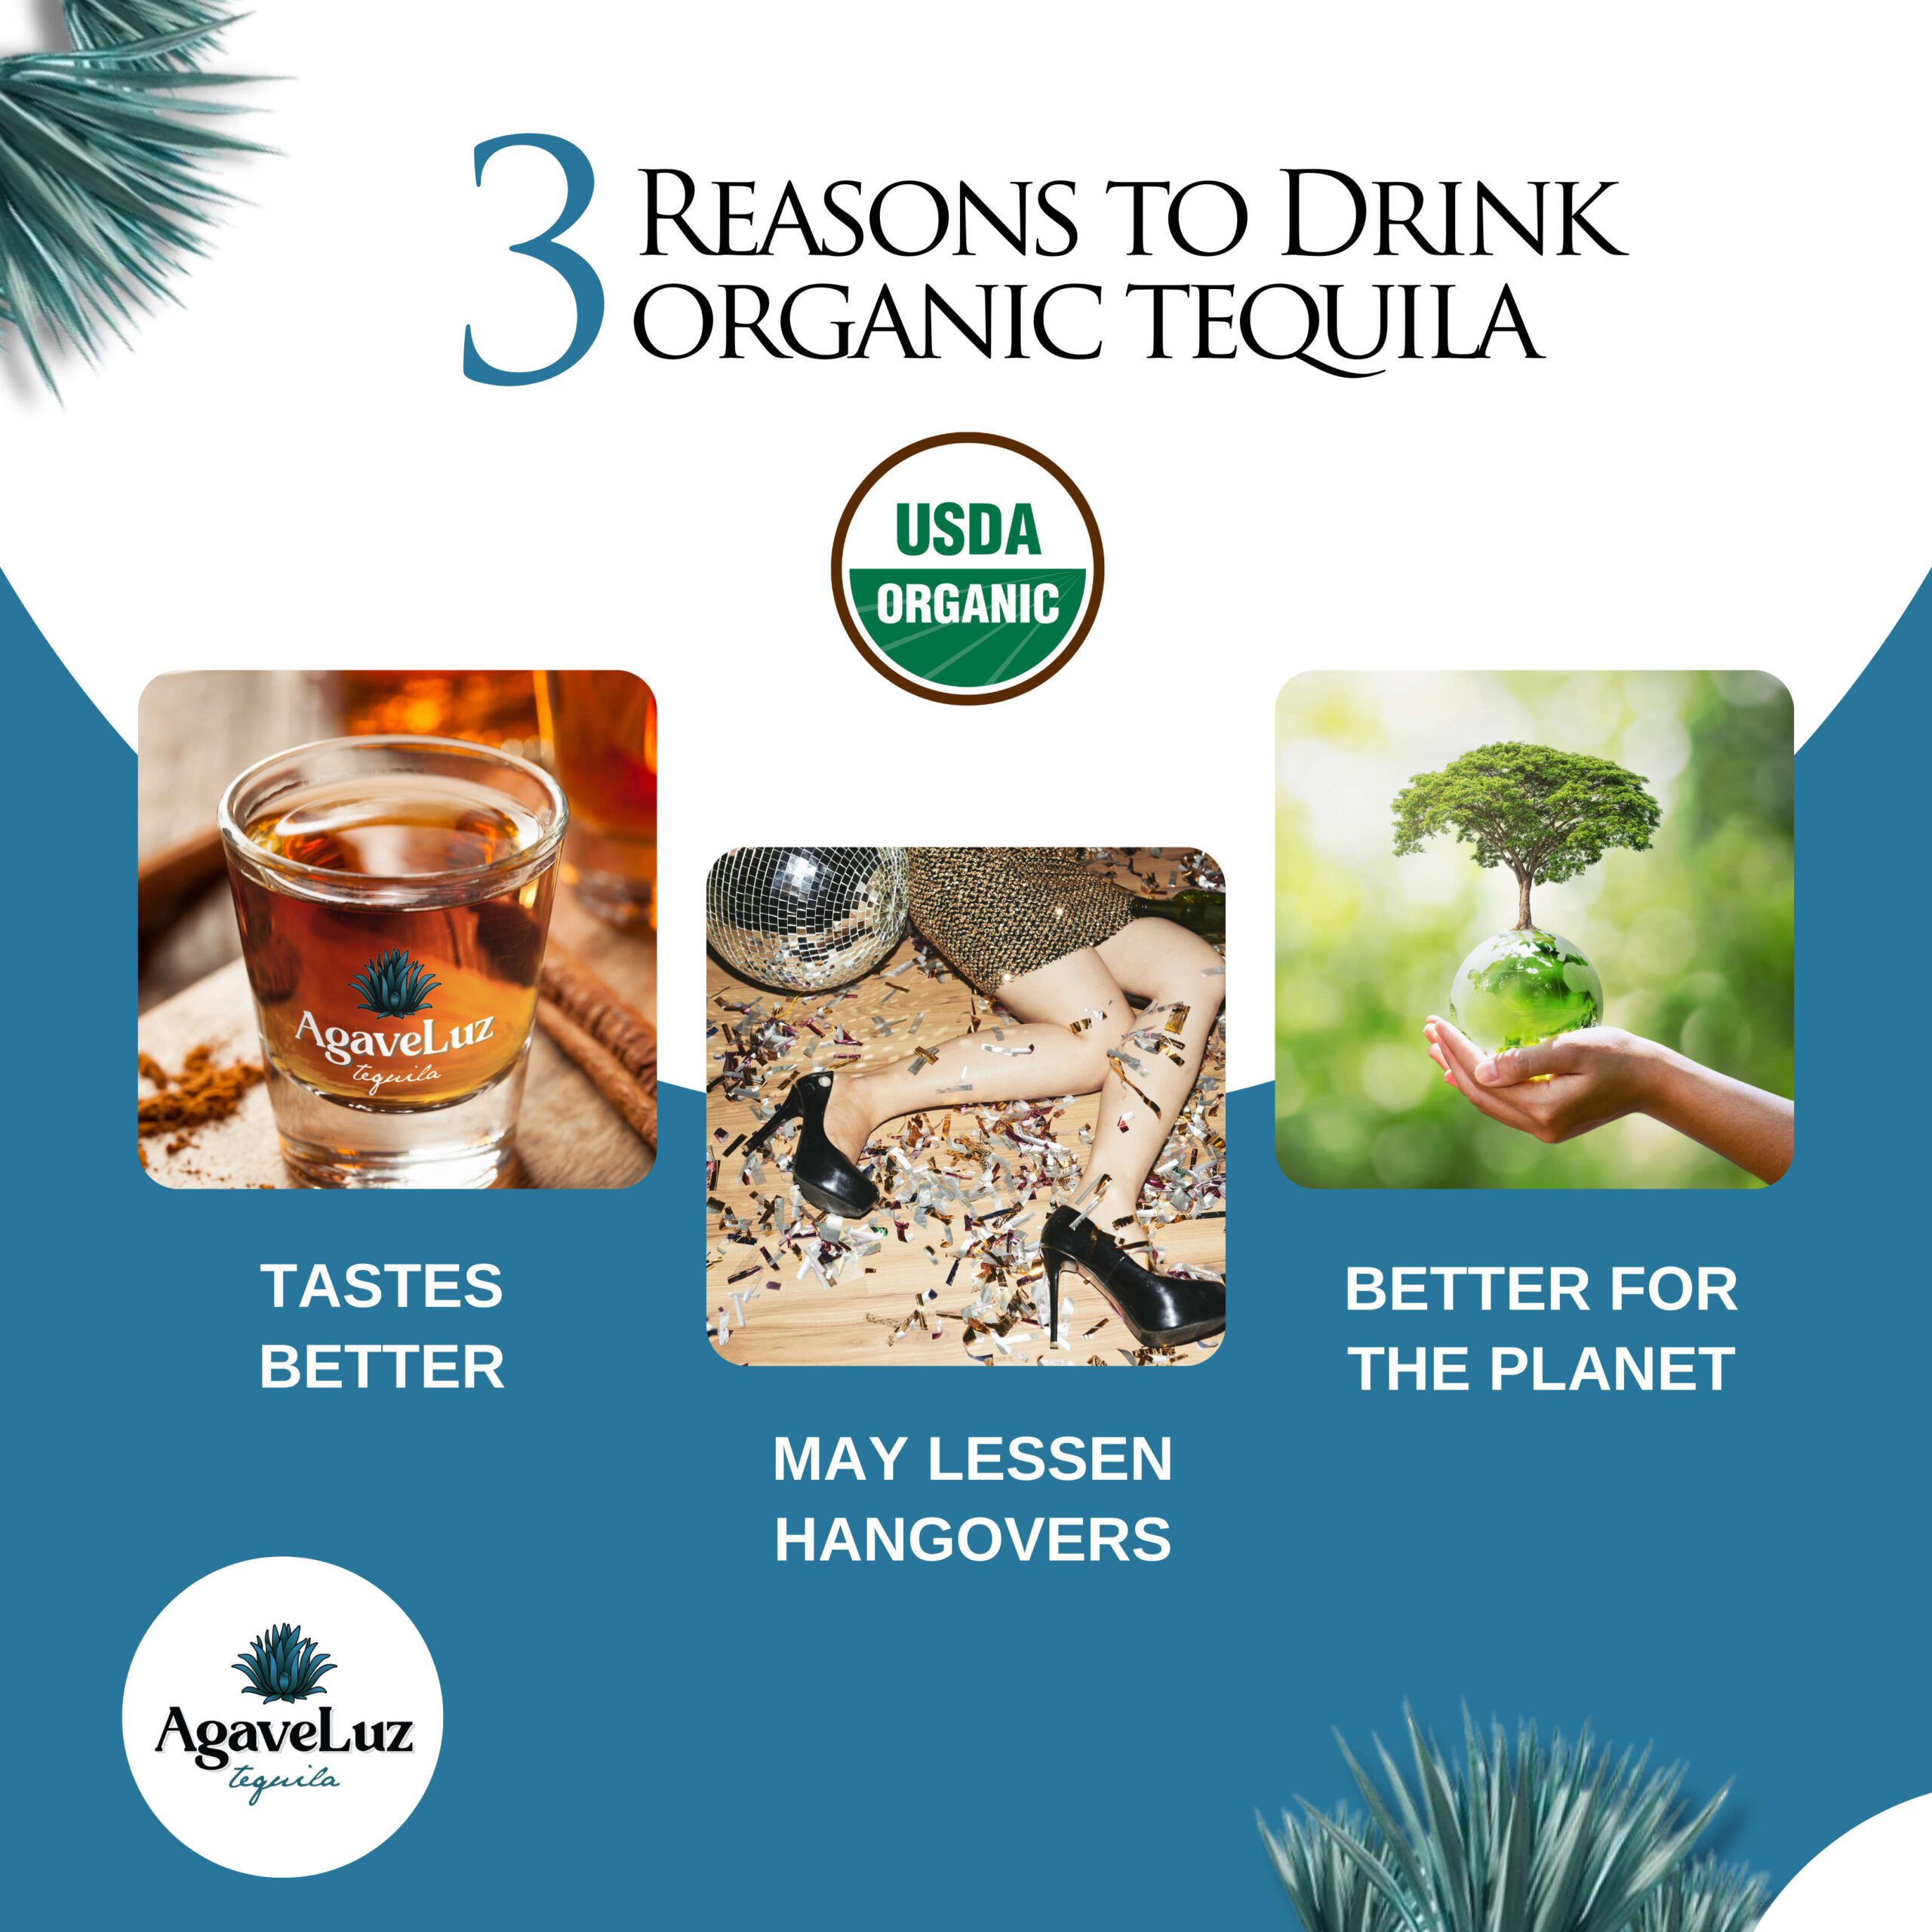 Why Drink AgaveLuz Organic Tequila?